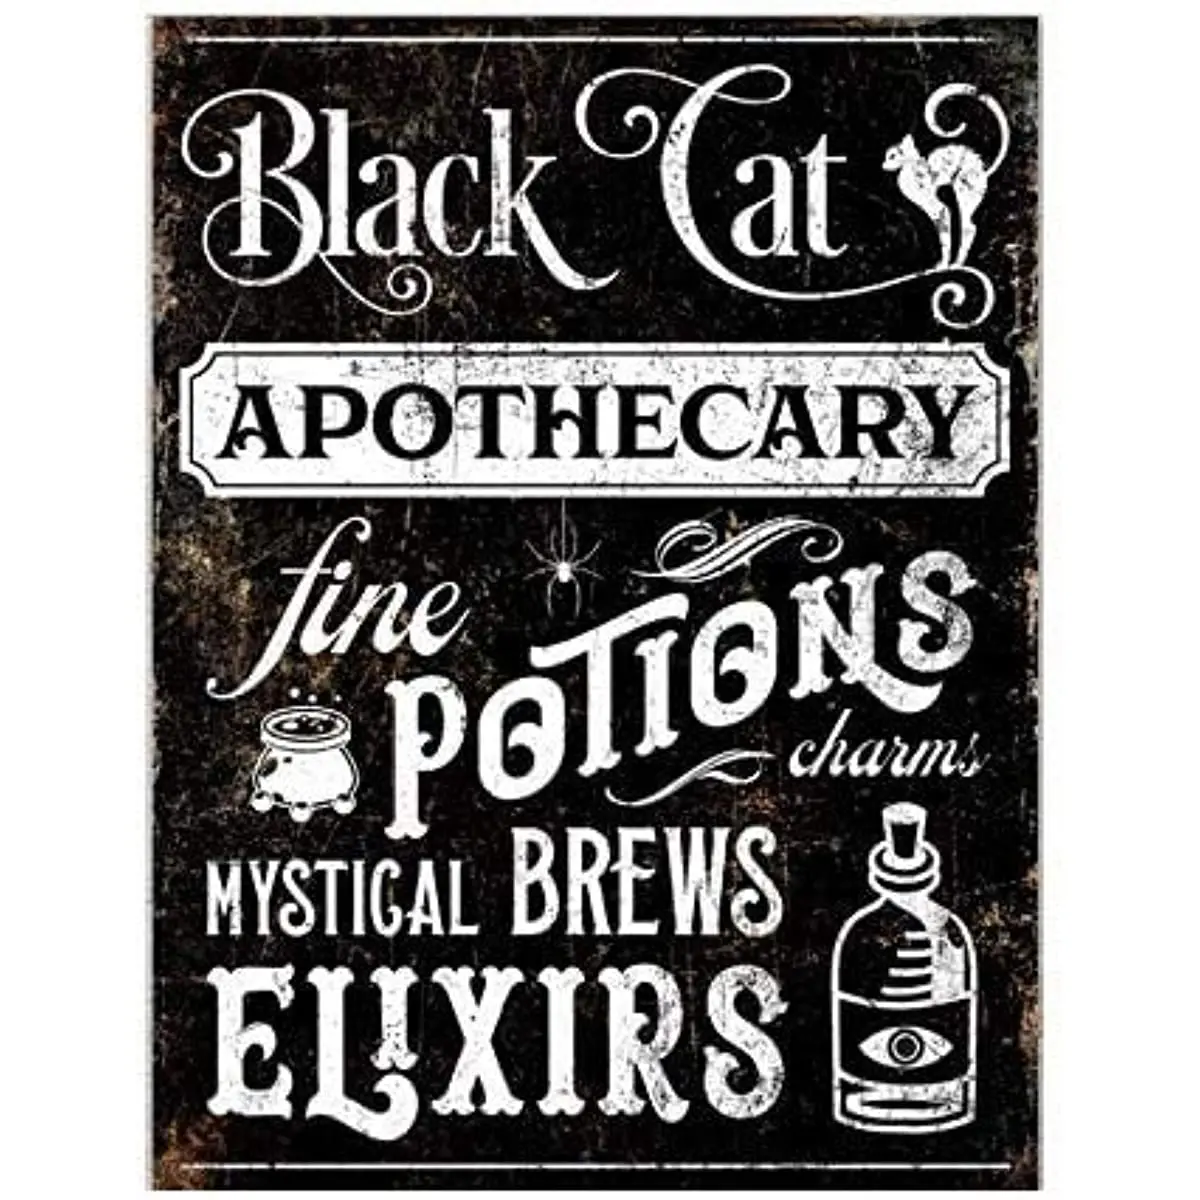 

Black Cat Apothecary Fine Potions & Elixirs Metal Tin Wall Art Rustic Fall Sign Creepy Gothic Halloween Xmas Home Bar Decor